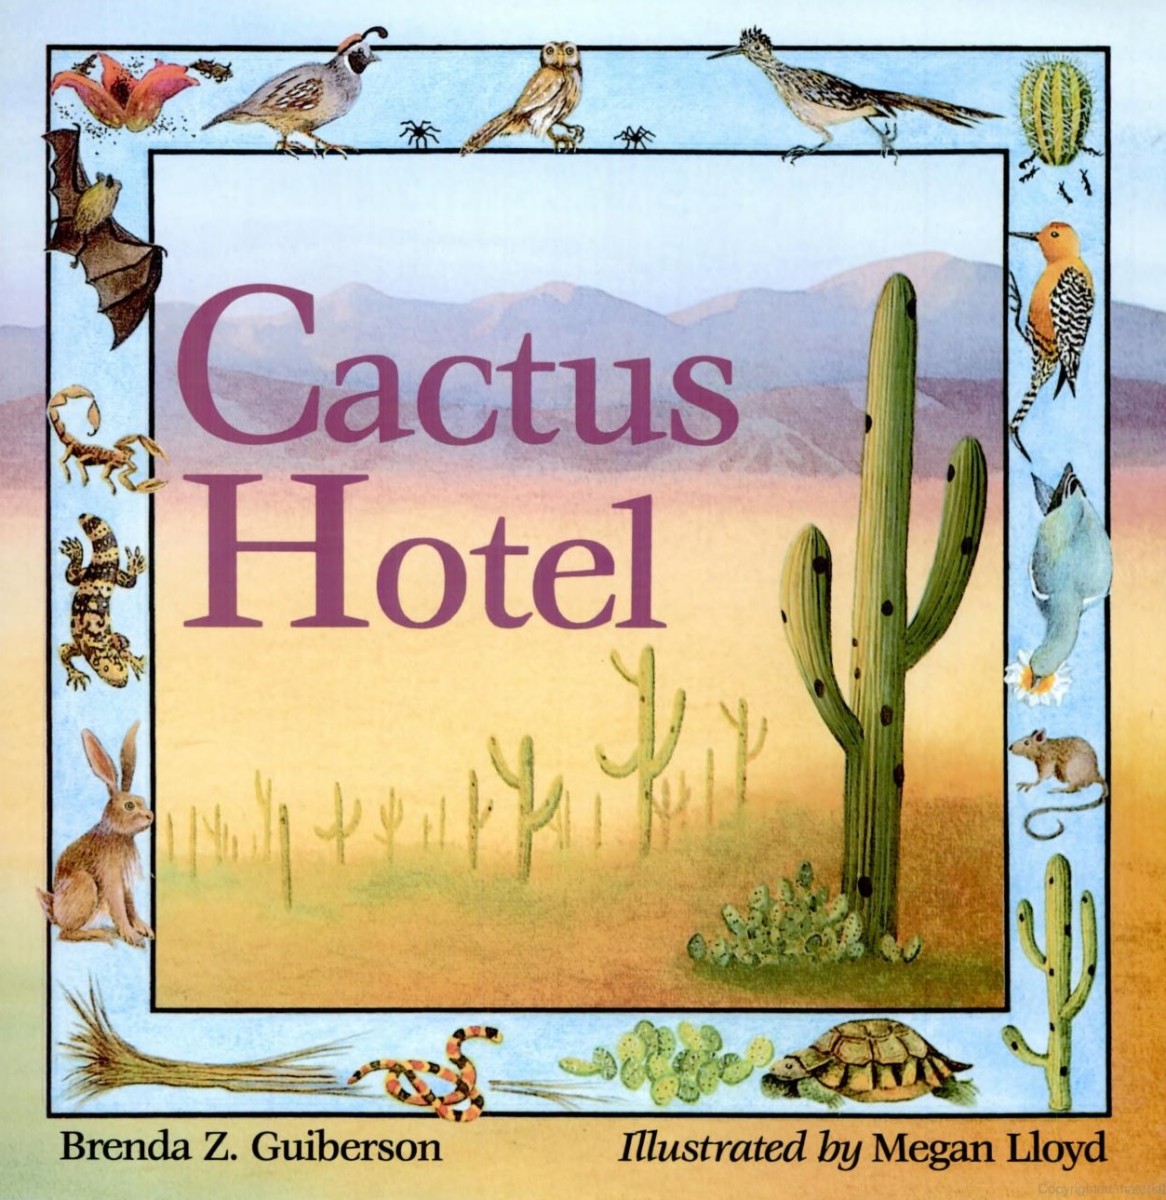 Cactus Hotel by Brenda Z. Guidberson and Megan Lloyd